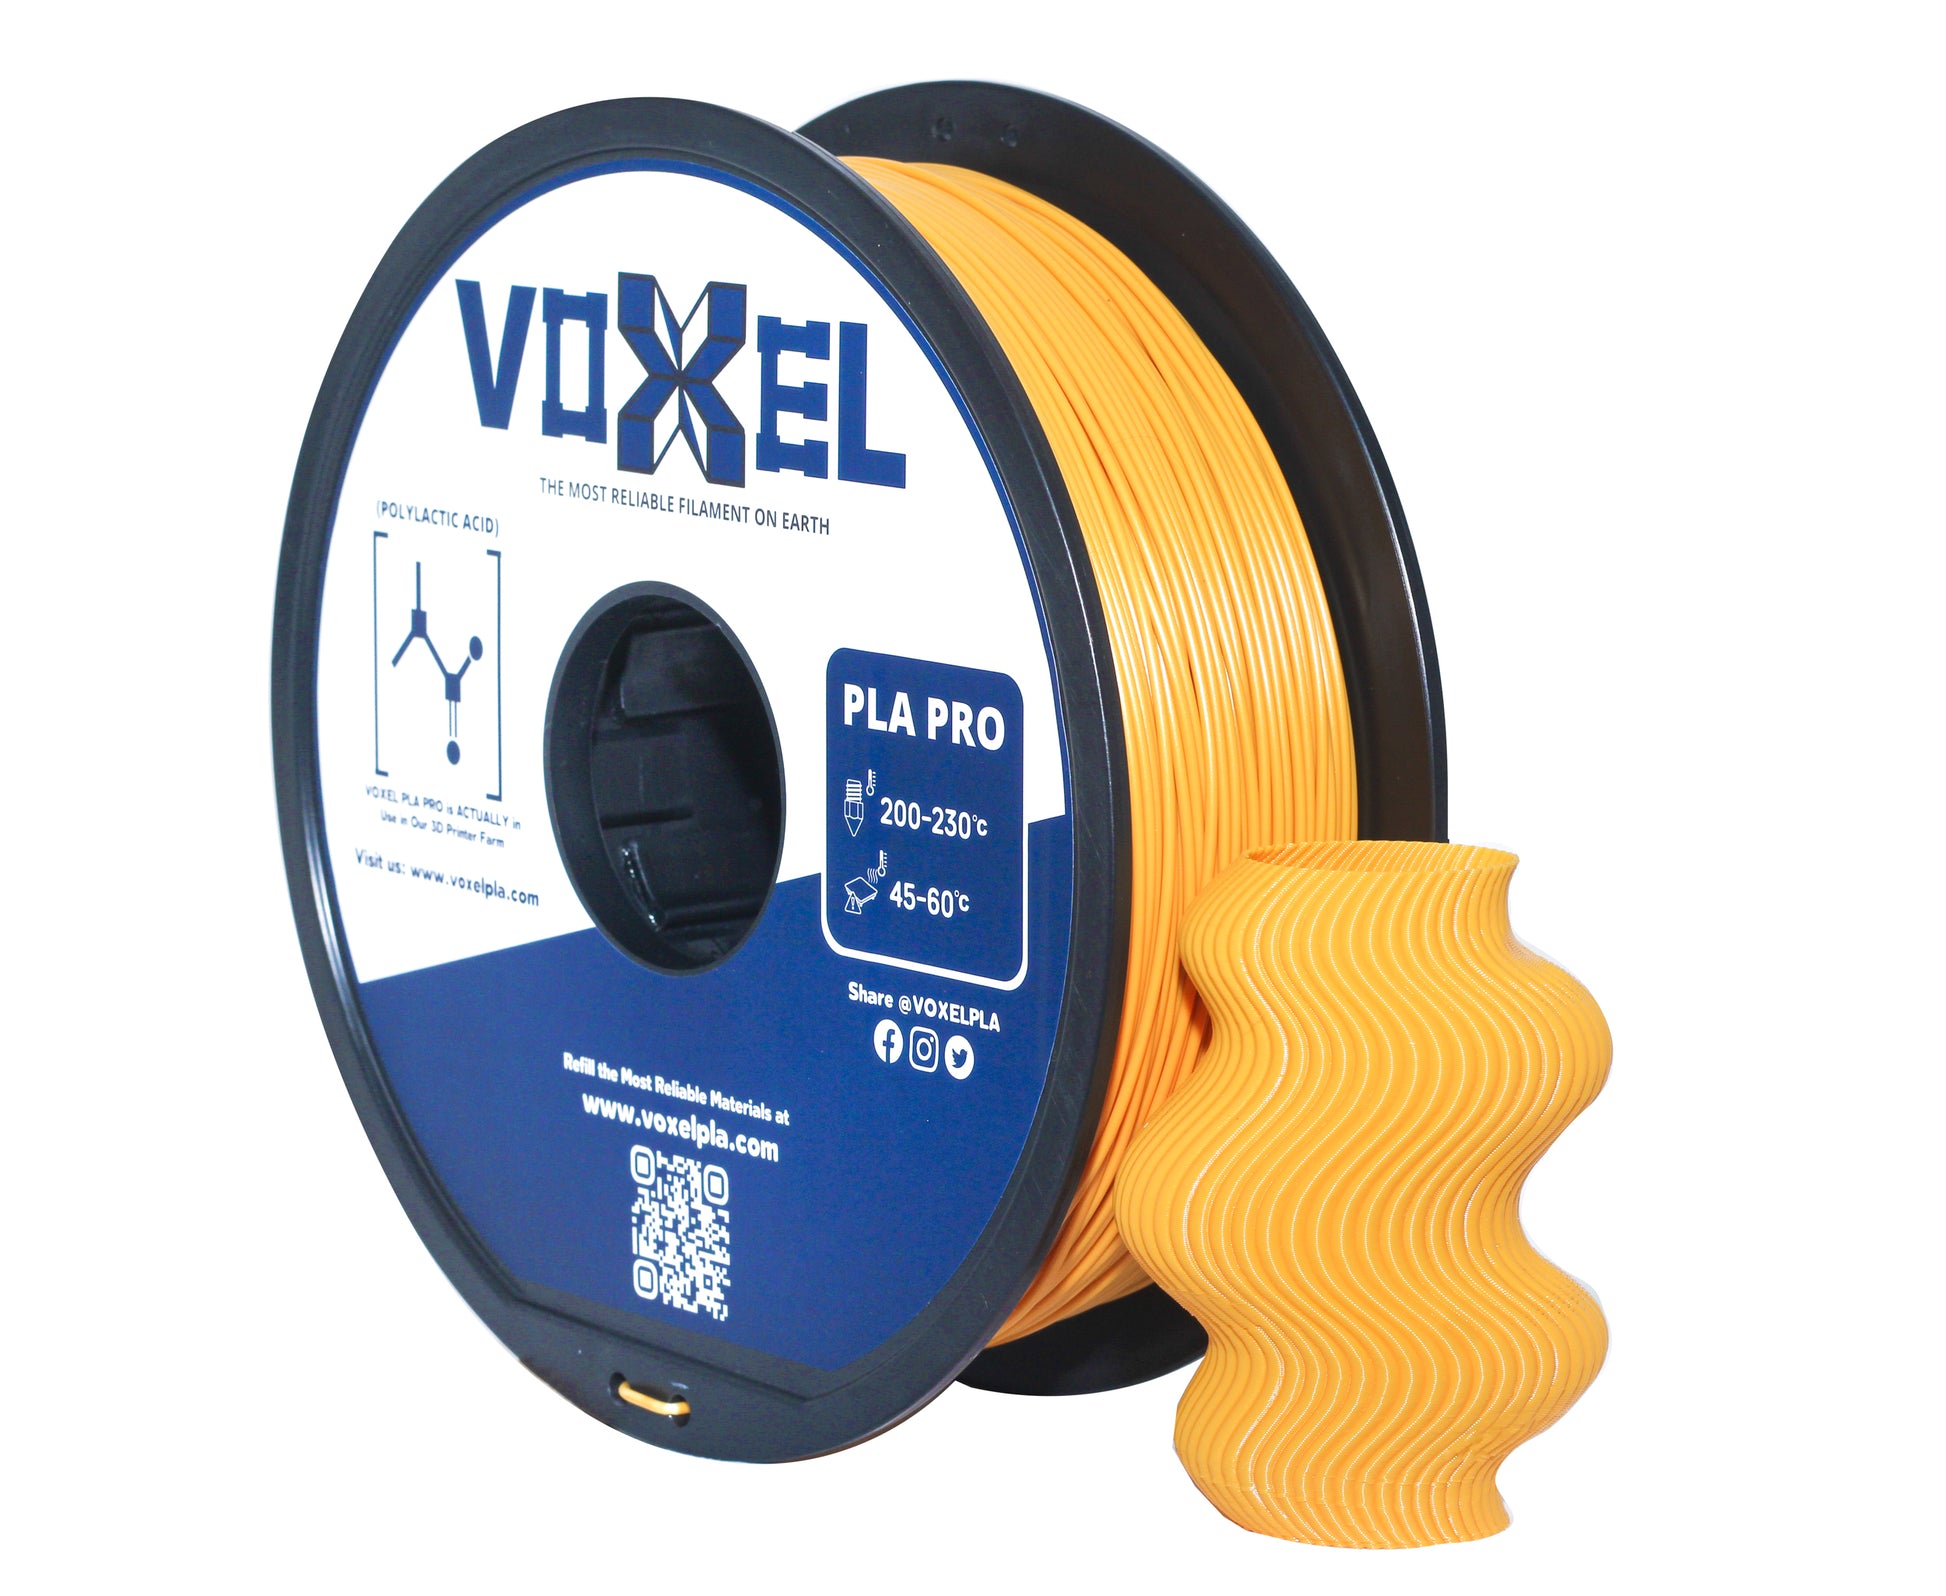 VOXELPLA PLA PLUS Gold 1.75mm for FDM 3d printer, Bambu Lab P1P, X1C, Creality, Anycubic 3D Printer